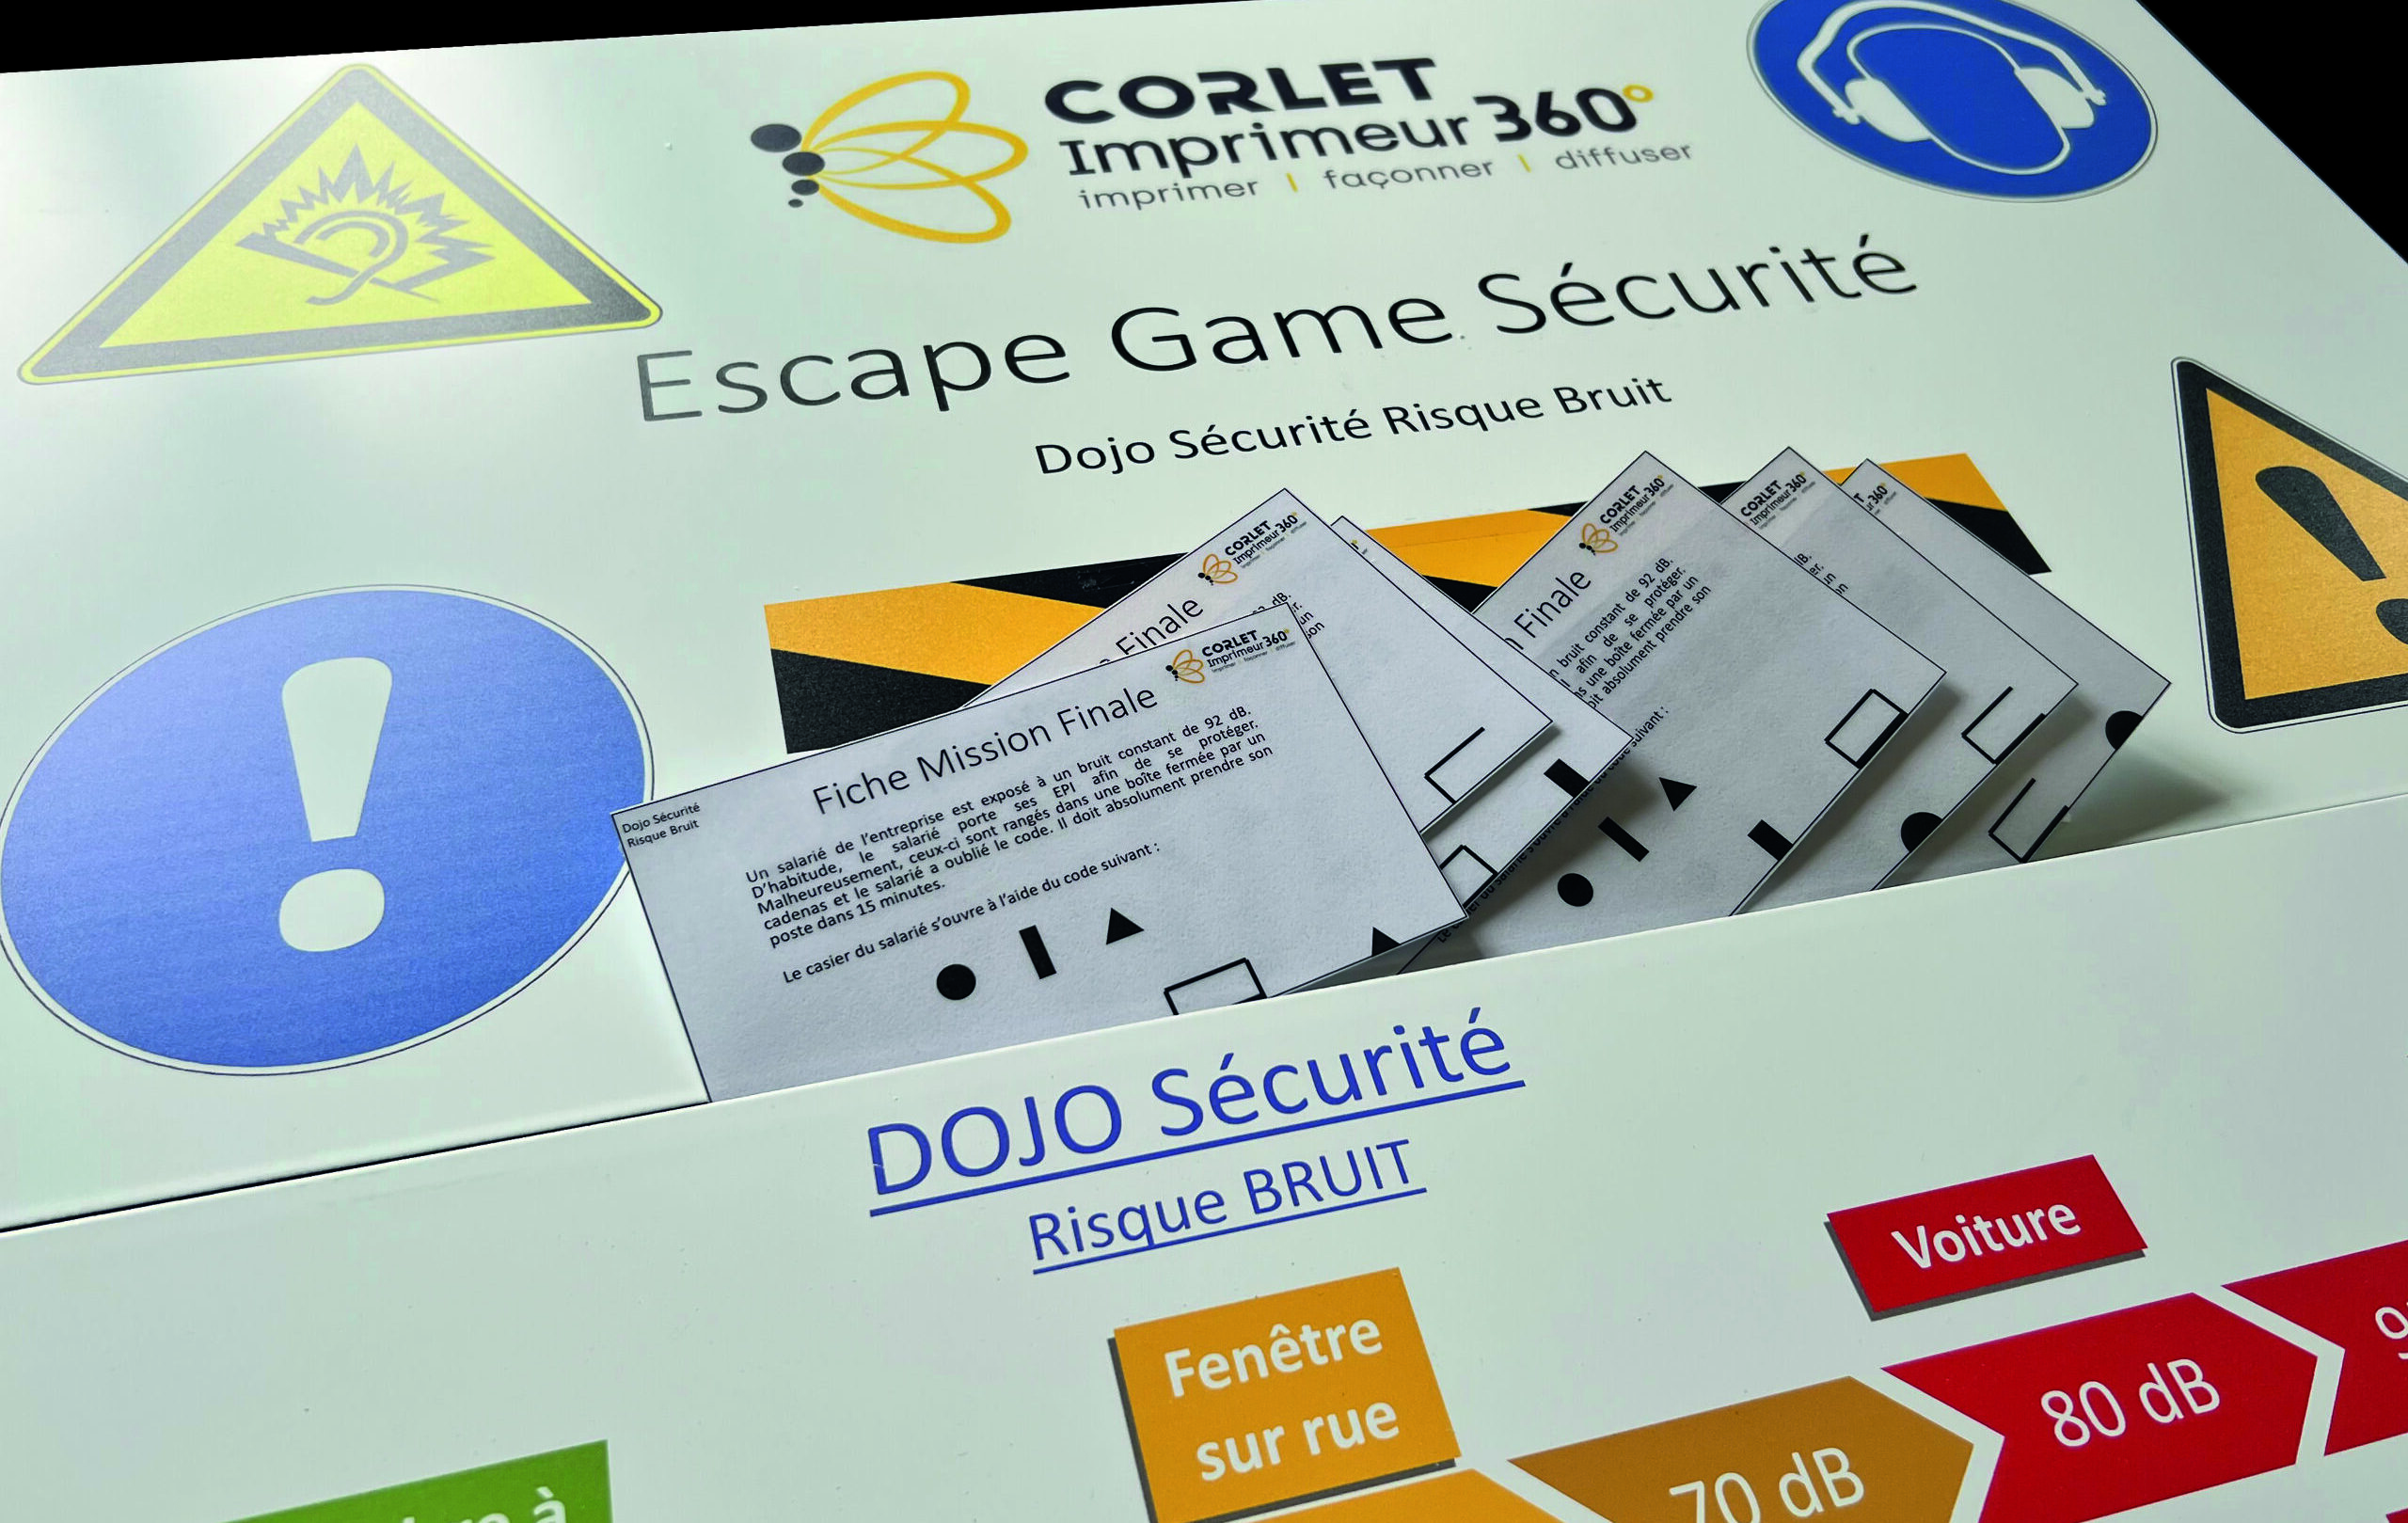 Dojo Bruit escape game - Groupe Corlet